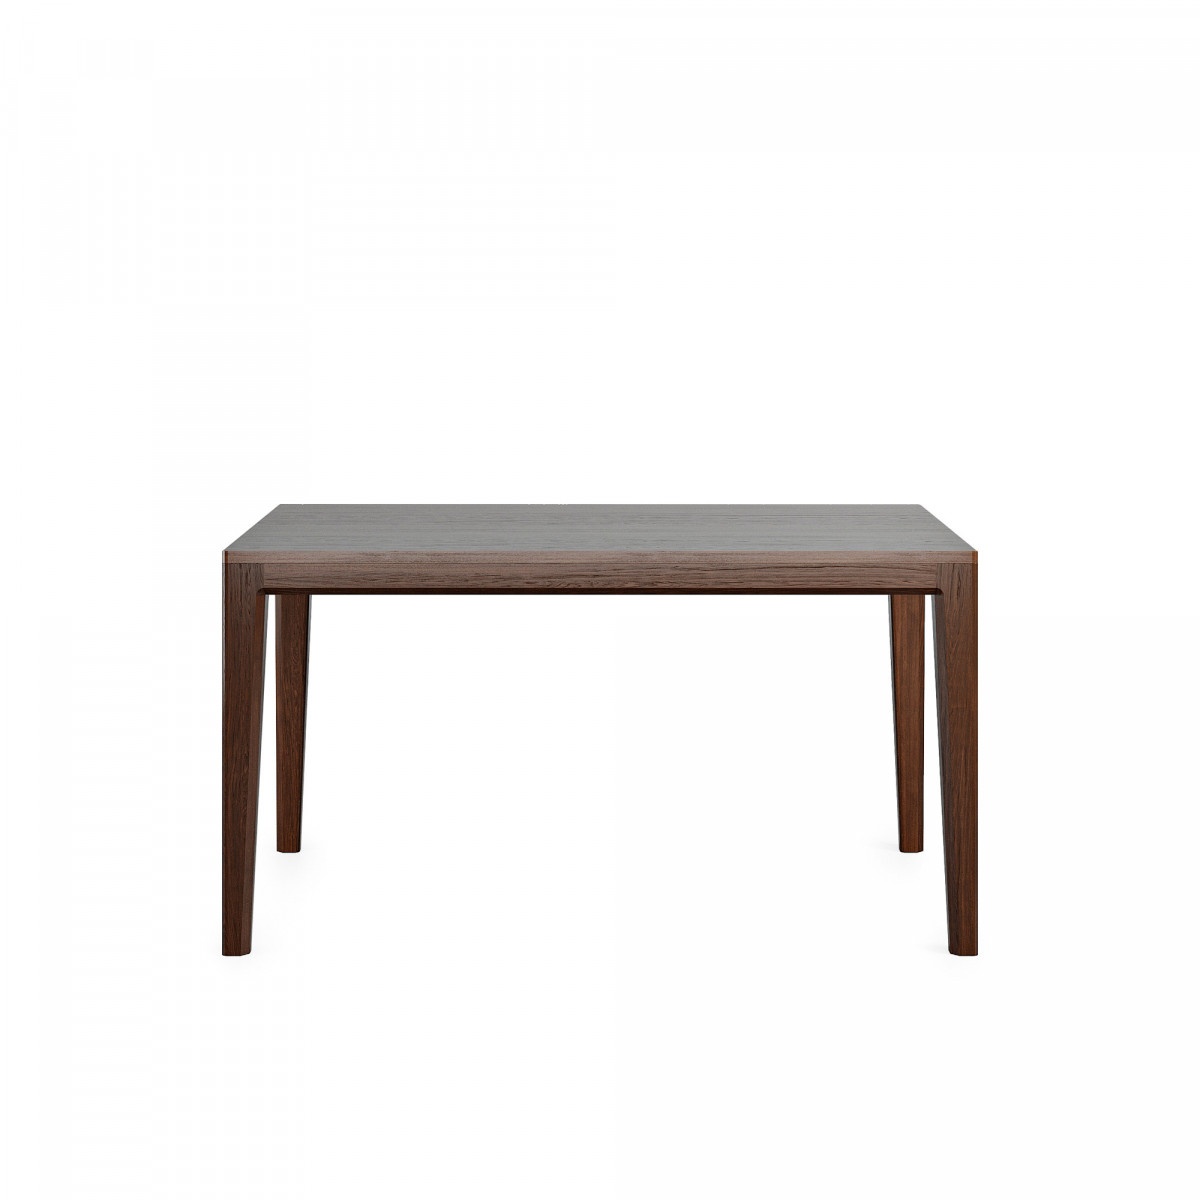 Обеденный стол mavis mvt20 the idea коричневый 140x75x80 см. preview 1